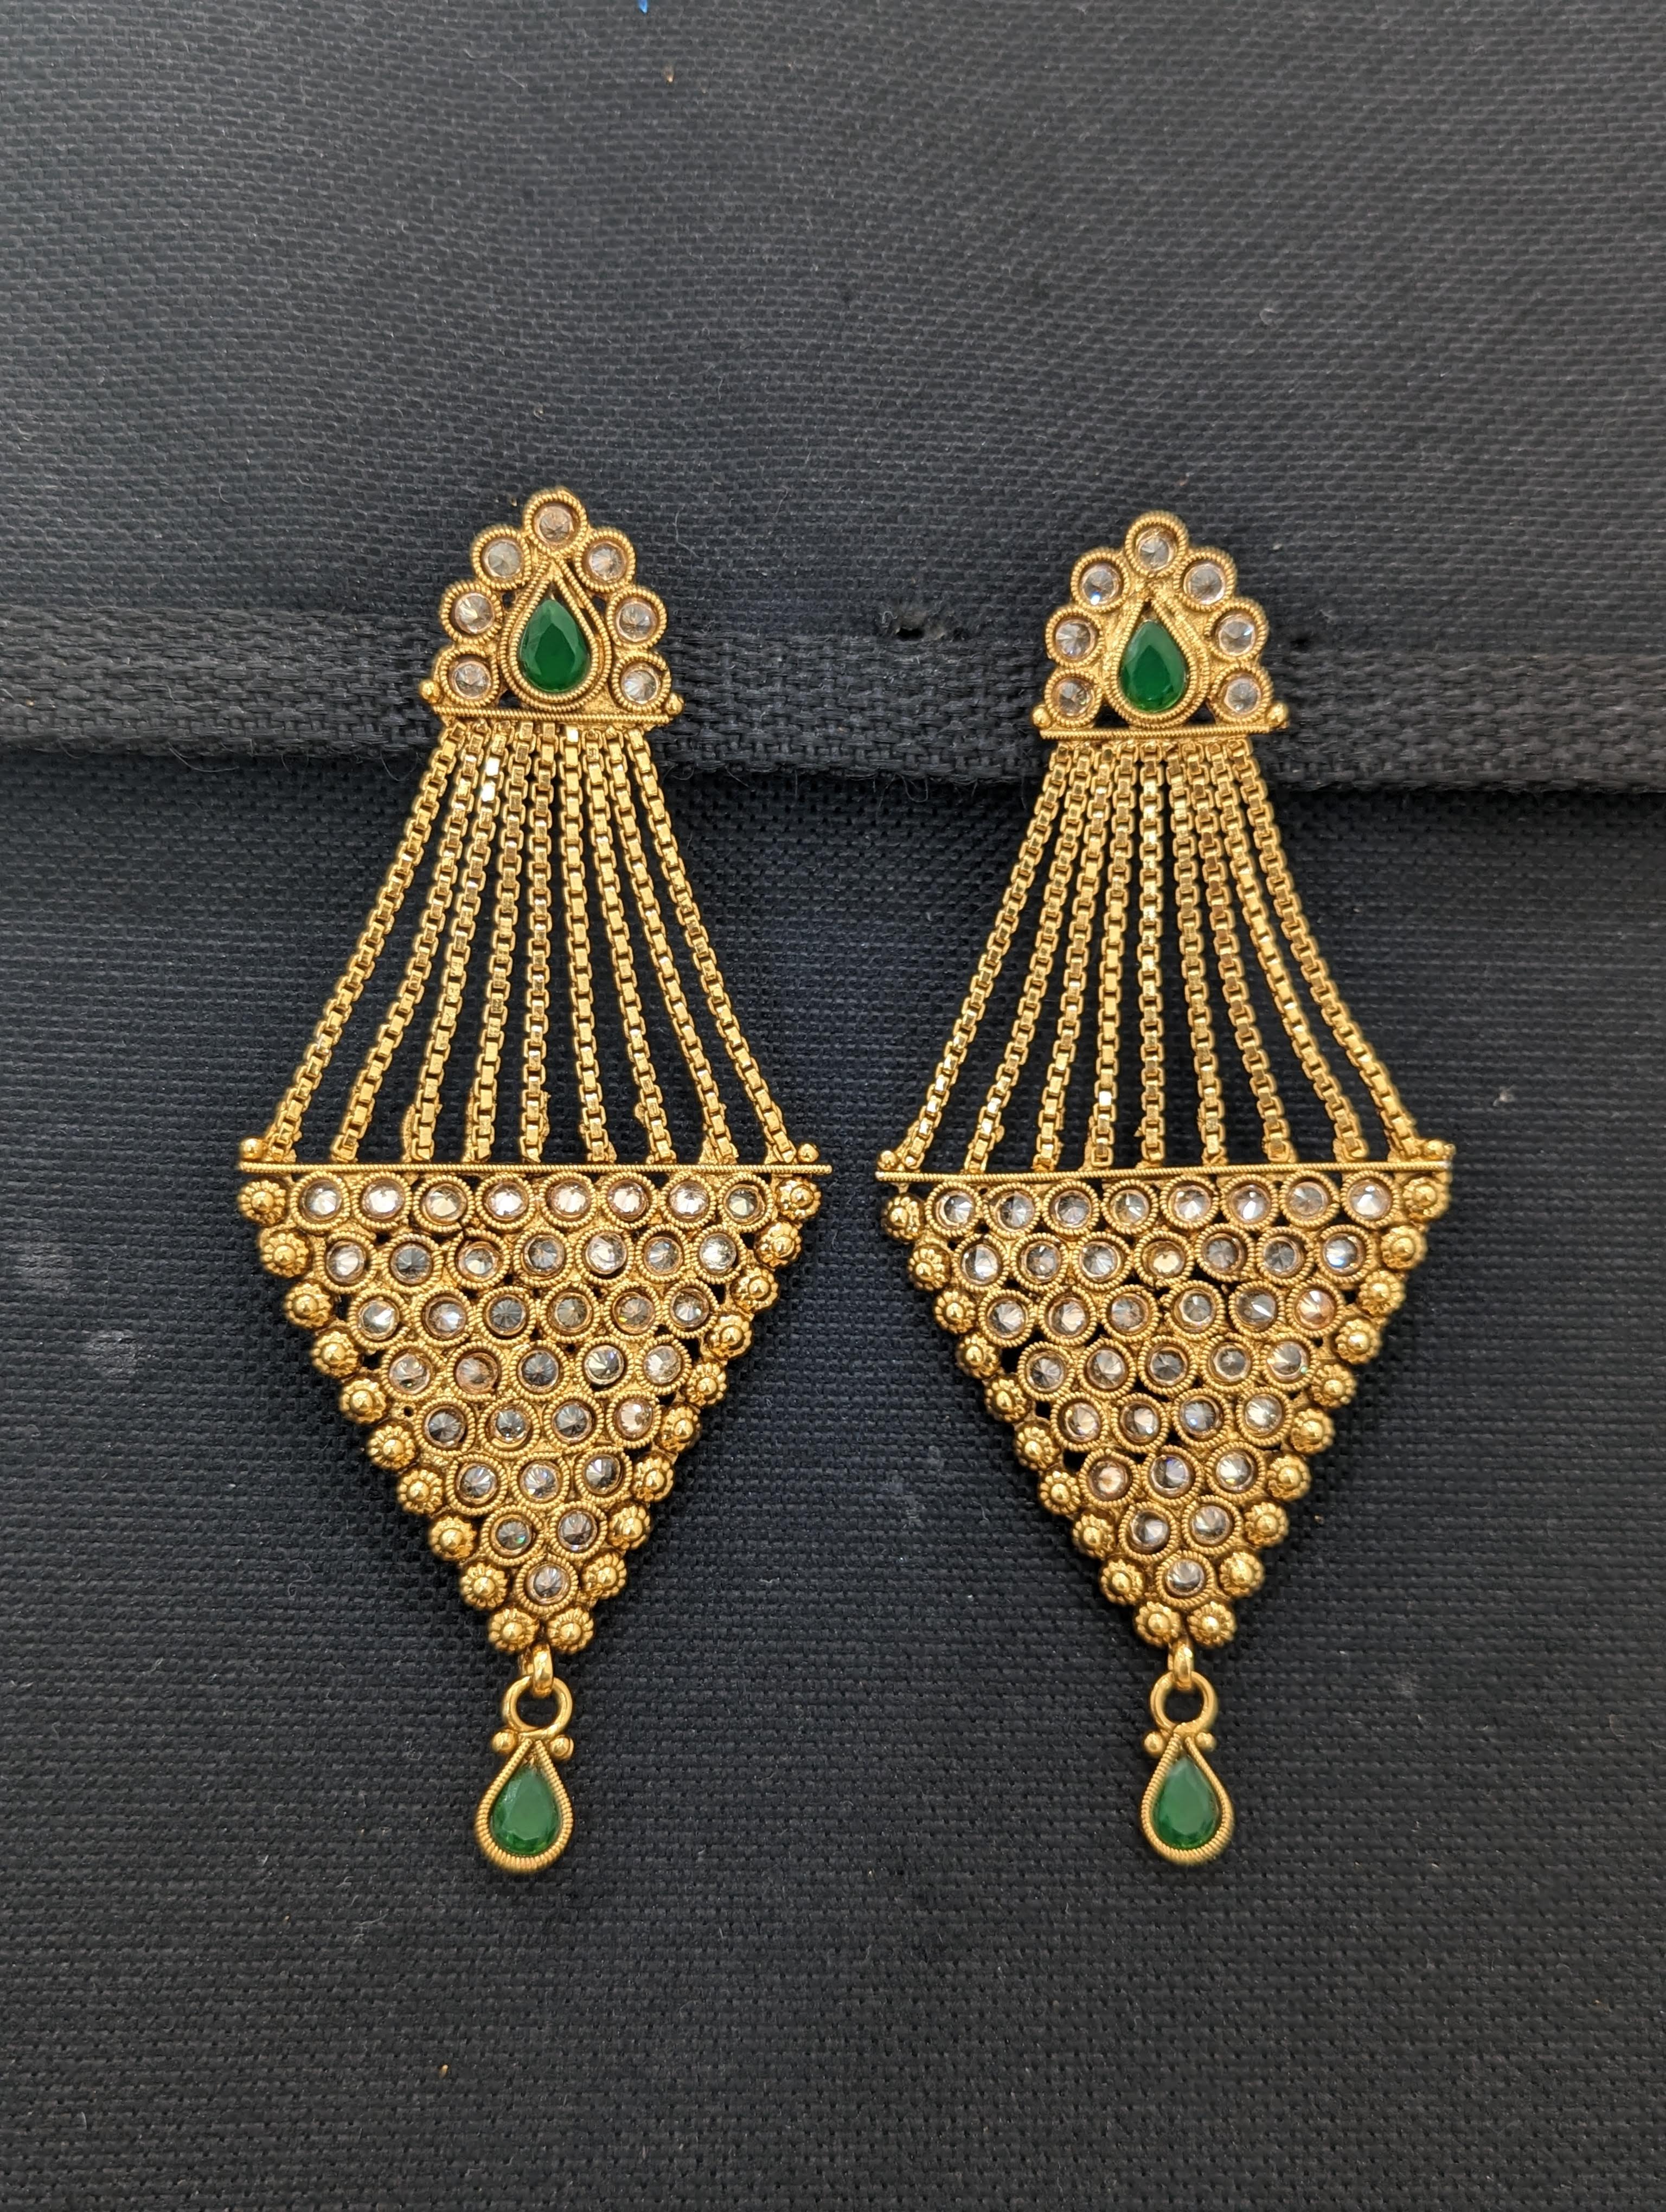 Amazon.com: Unique abstract face Art earrings dangle statement long earrings  for women girl tassel chandelier handwork earrings jewelry fashion (Golden  Blue Diamond): Clothing, Shoes & Jewelry